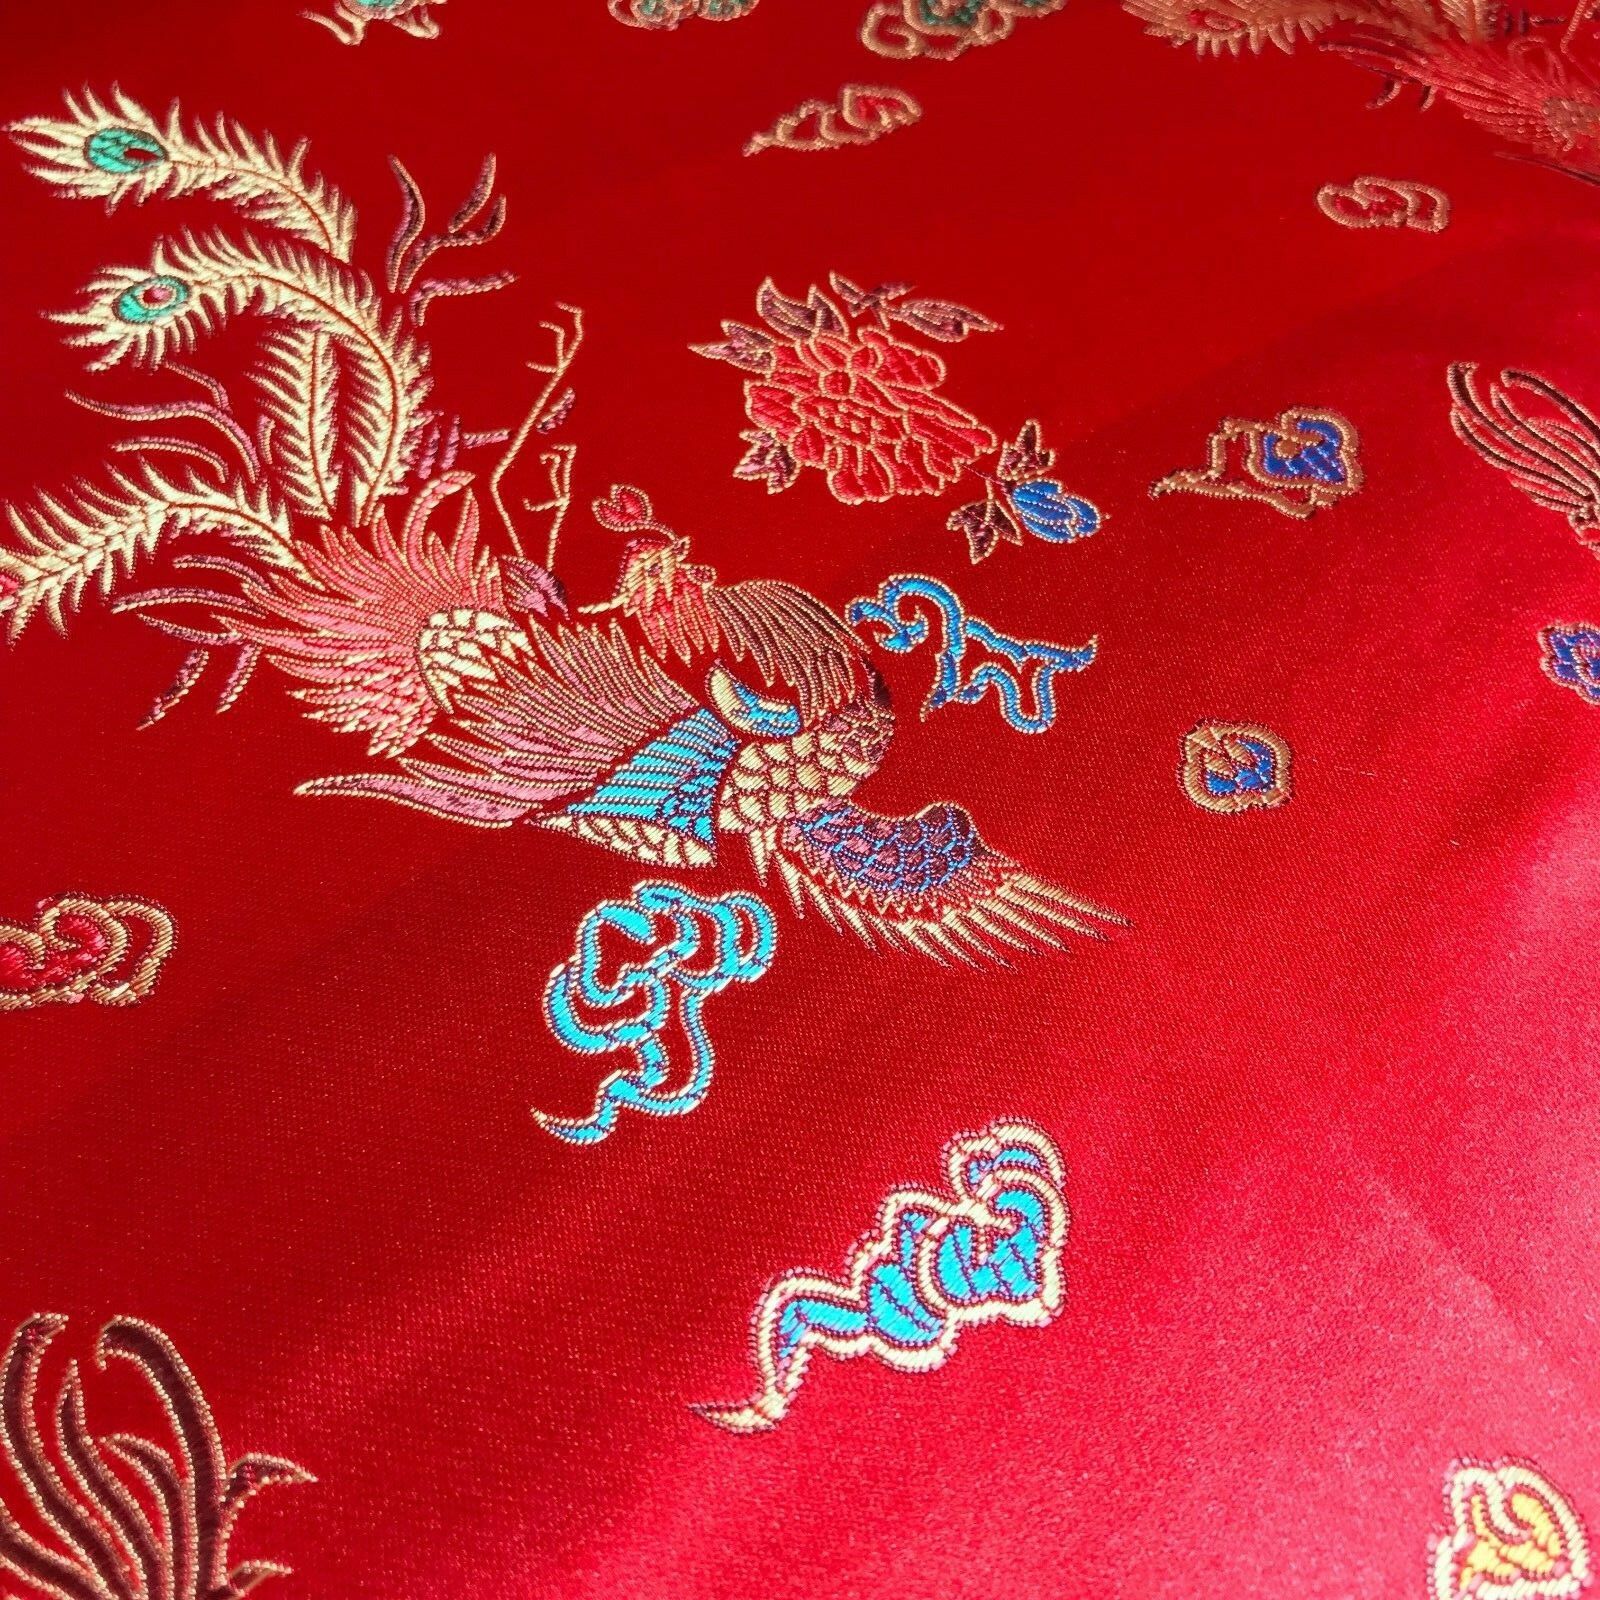 Kinesisk orientalsk Dragon satin brokade kjole bred M797 Midland Textiles